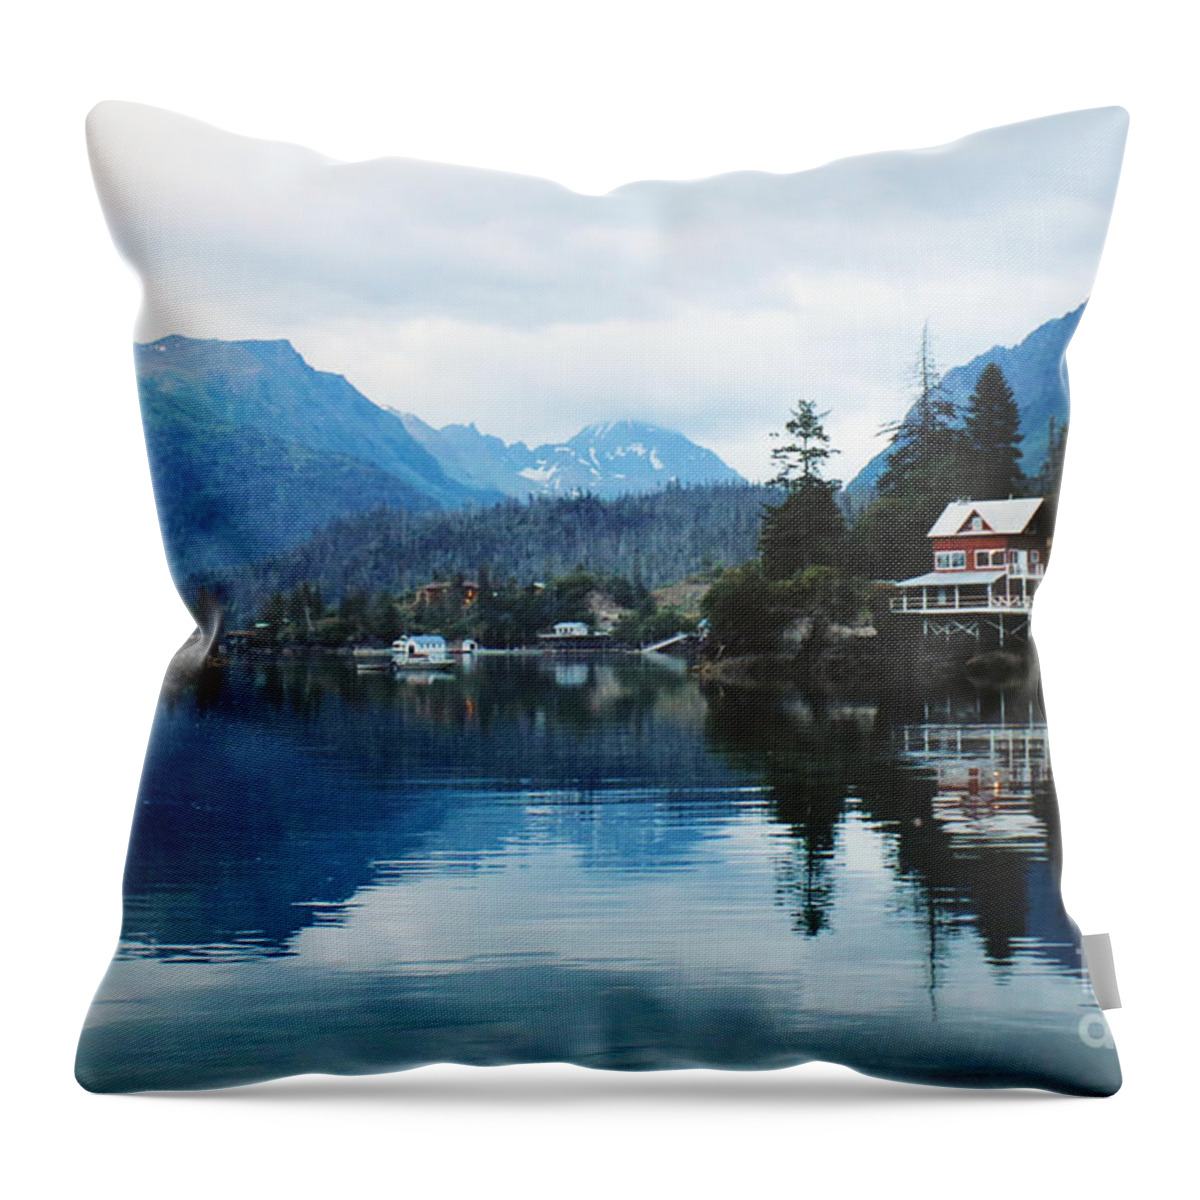 Alaska Throw Pillow featuring the digital art Halibut Cove Alaska by Doug Gist